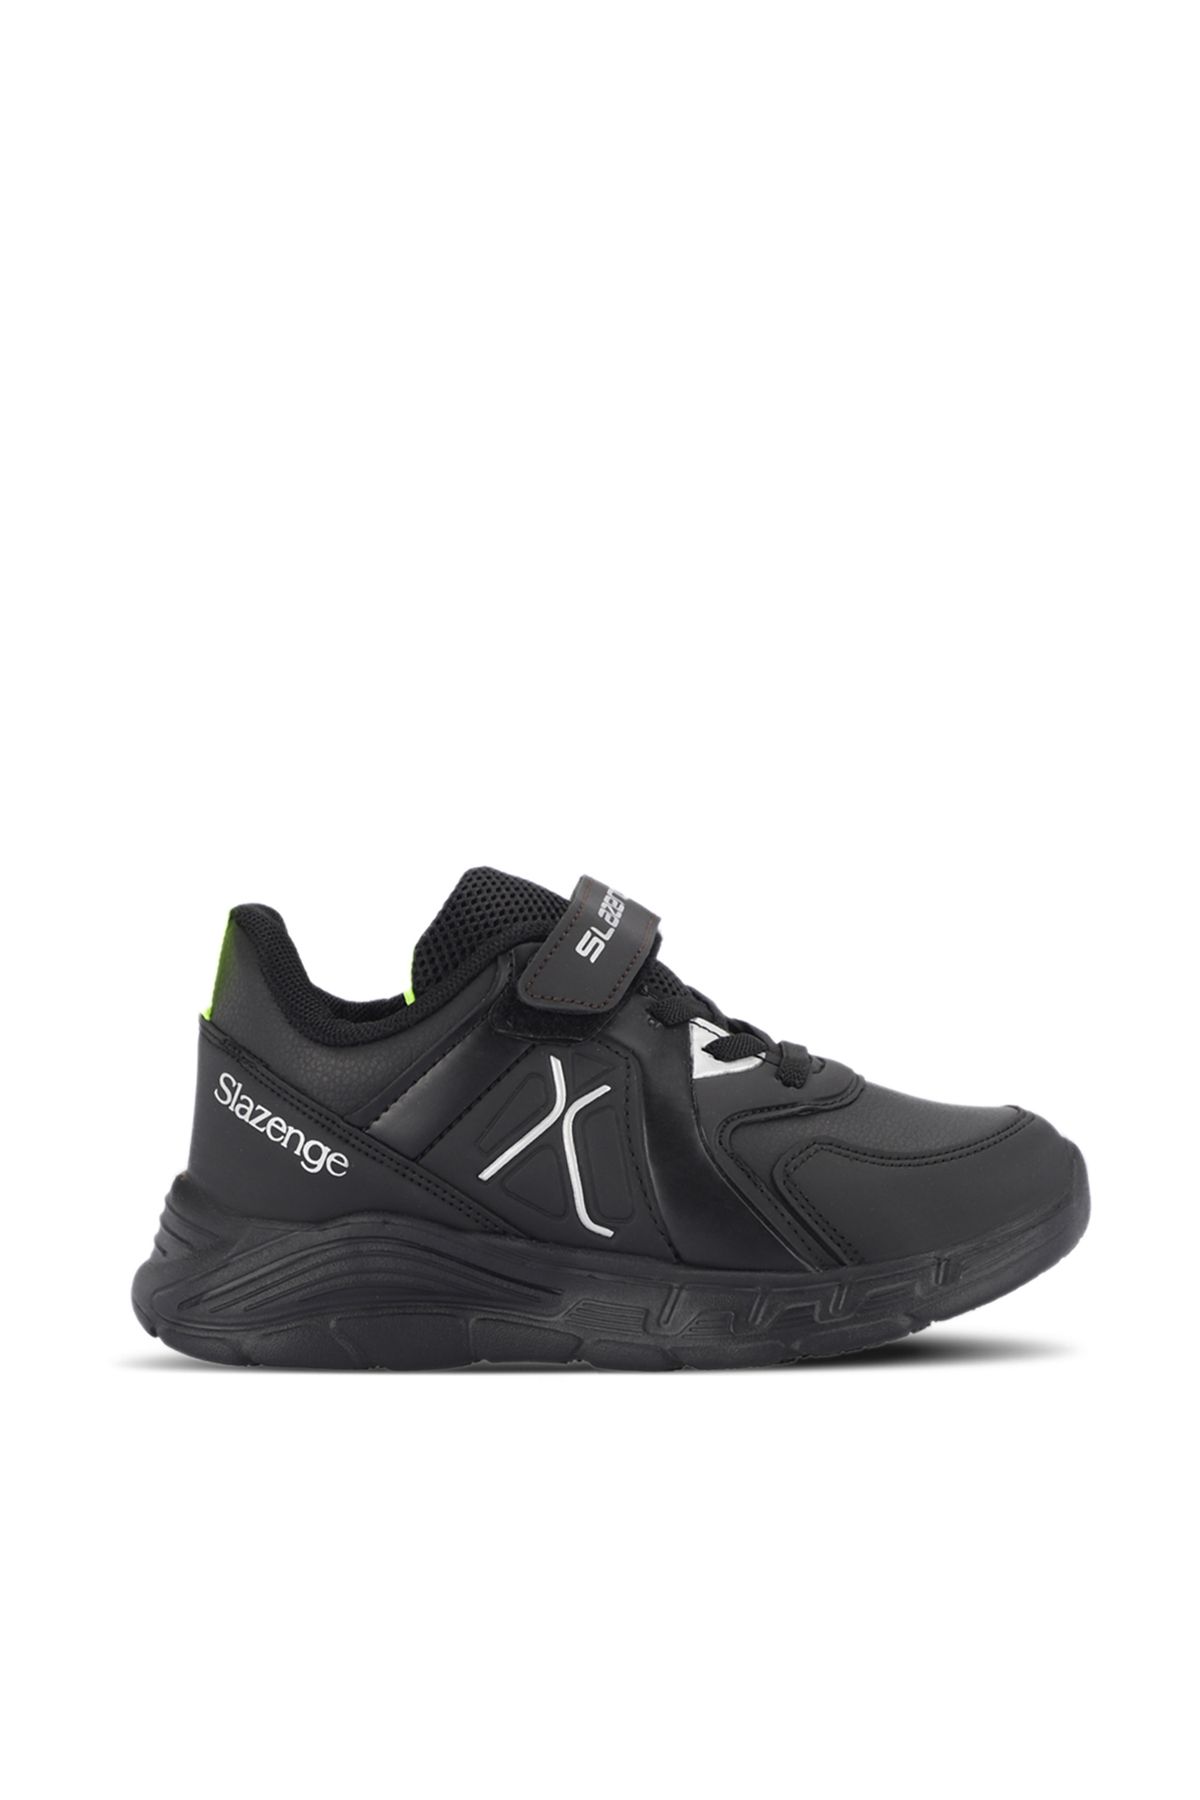 Slazenger VACATION I Sneaker Ayakkabı Siyah / Siyah